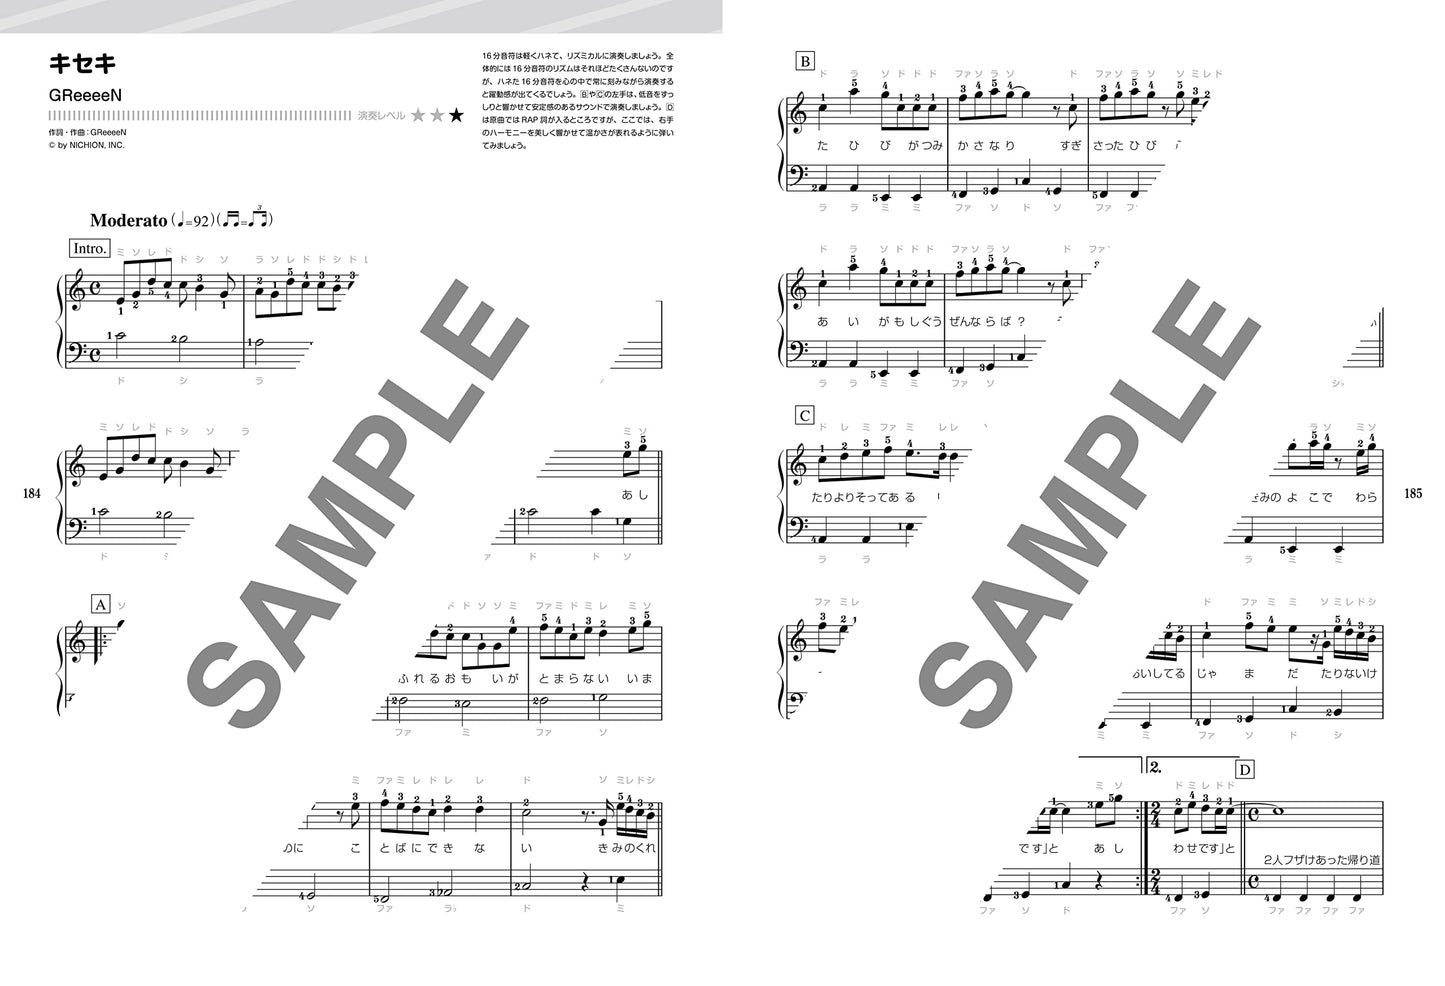 J-POP Super Best Piano Solo(Easy) Sheet Music Book